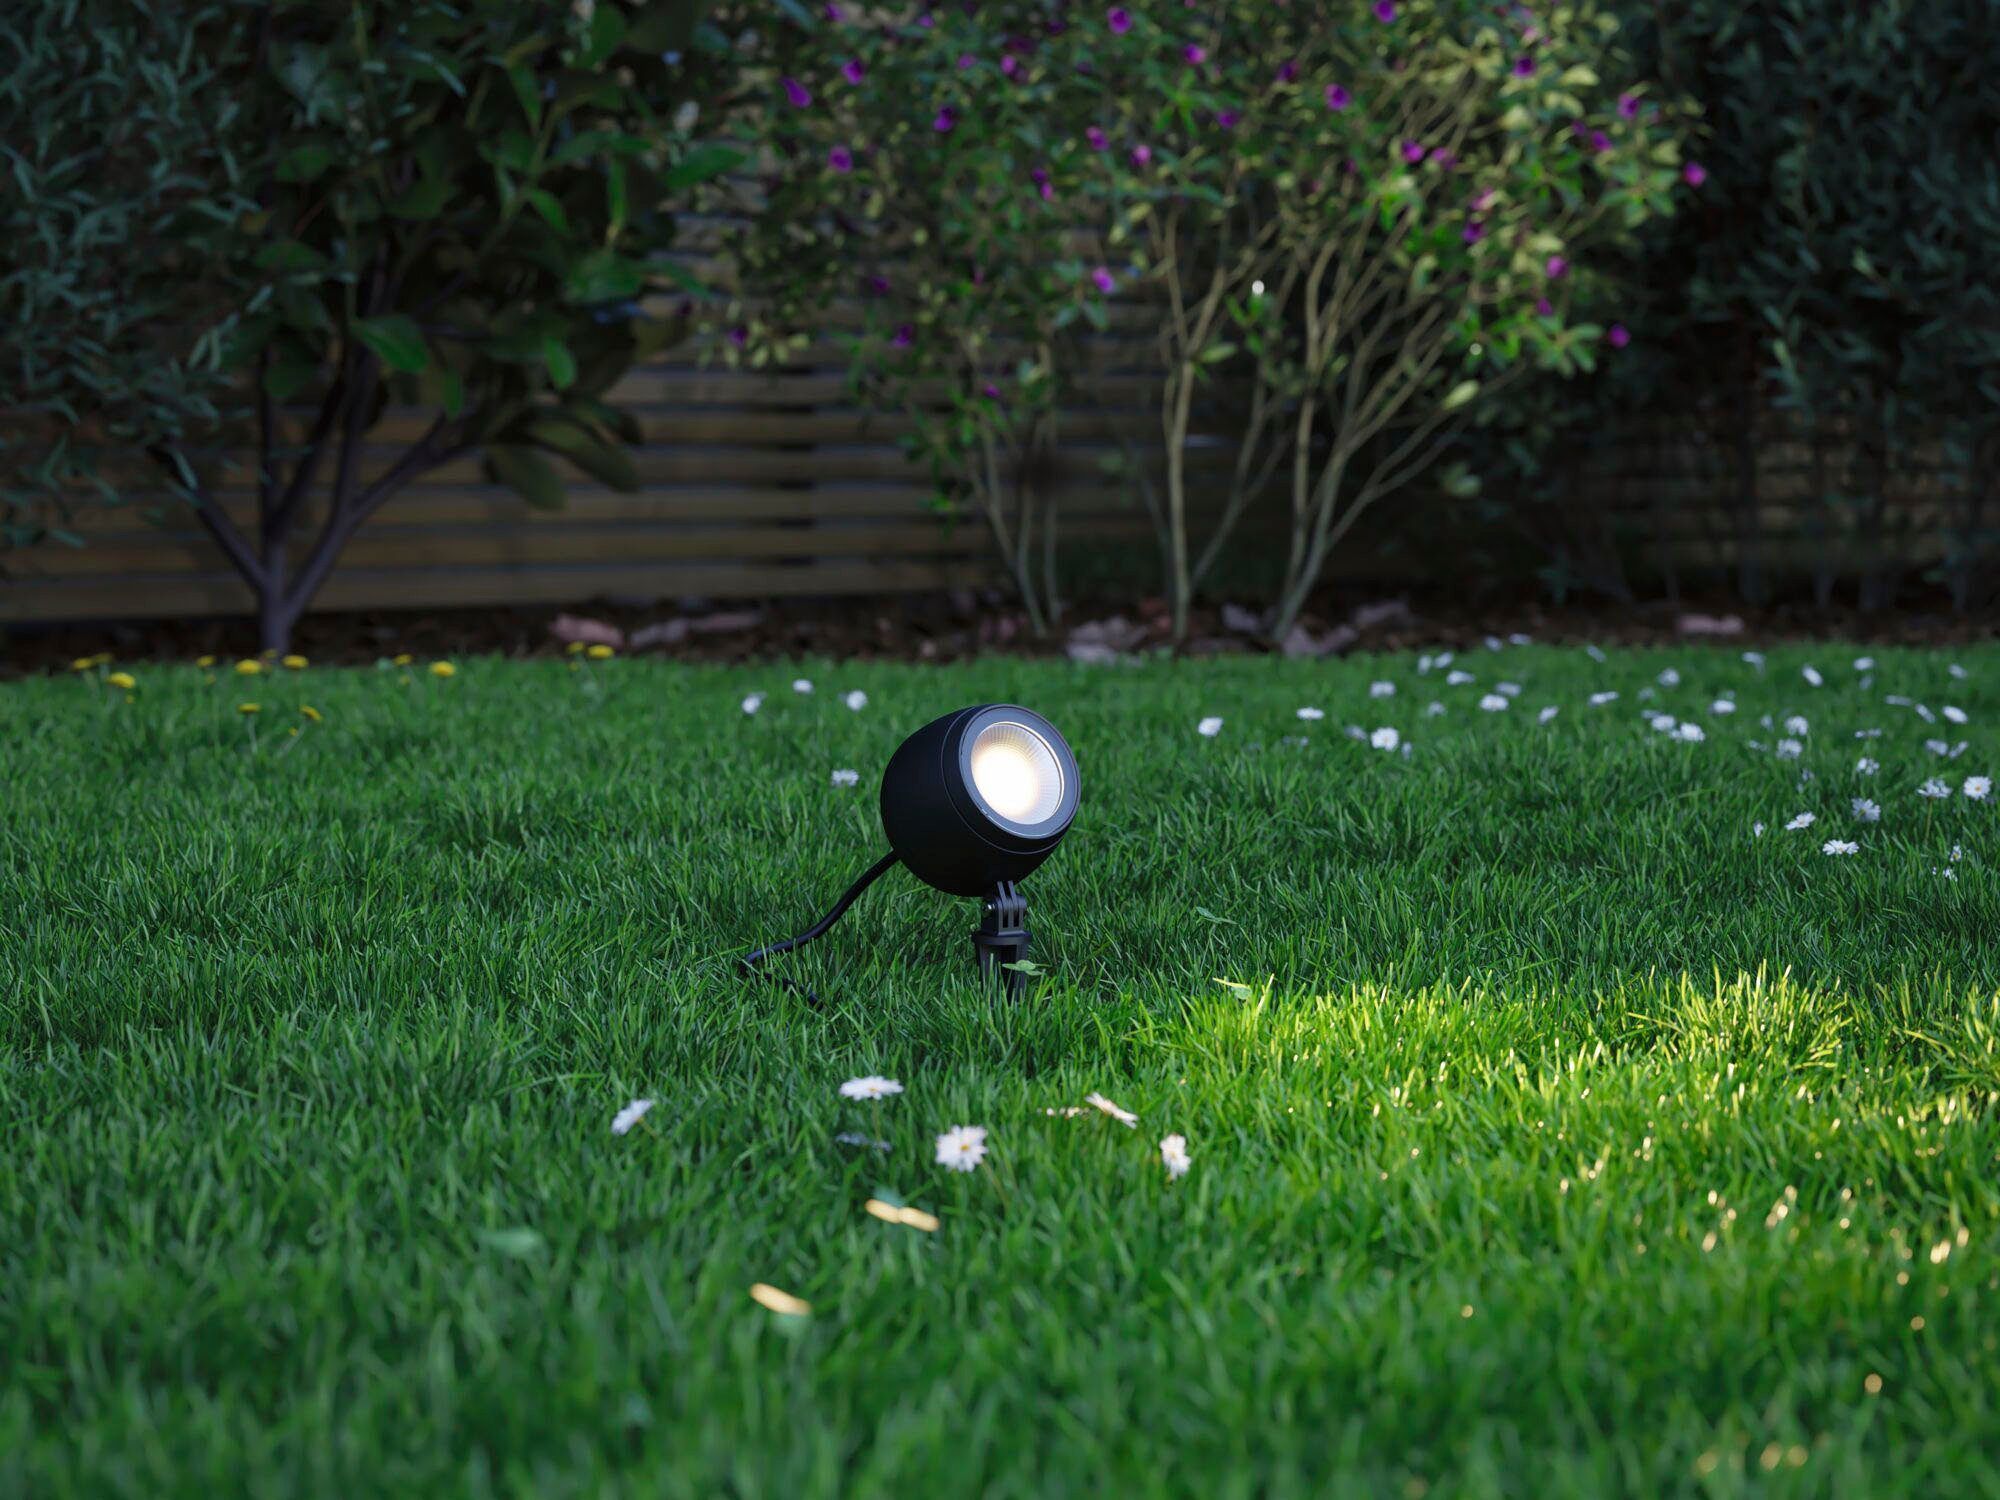 fest Kikolo, Outdoor 230V Spot 3000K anthrazit Gartenleuchte integriert, Warmweiß, LED Paulmann Kikolo 60° LED